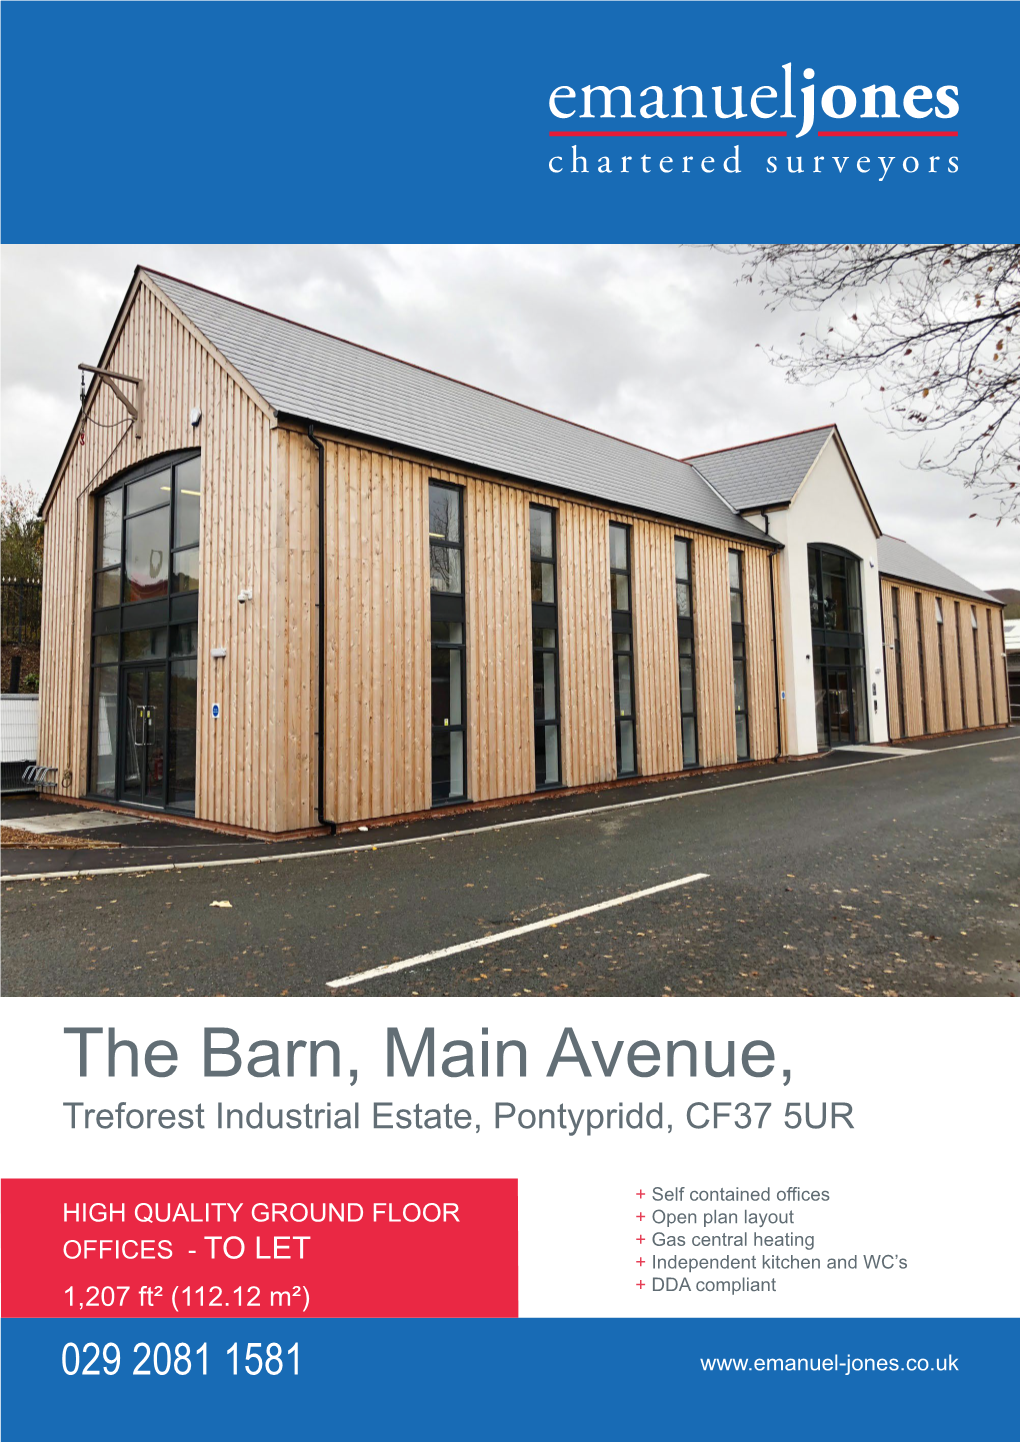 The Barn, Main Avenue, Treforest Industrial Estate, Pontypridd, CF37 5UR